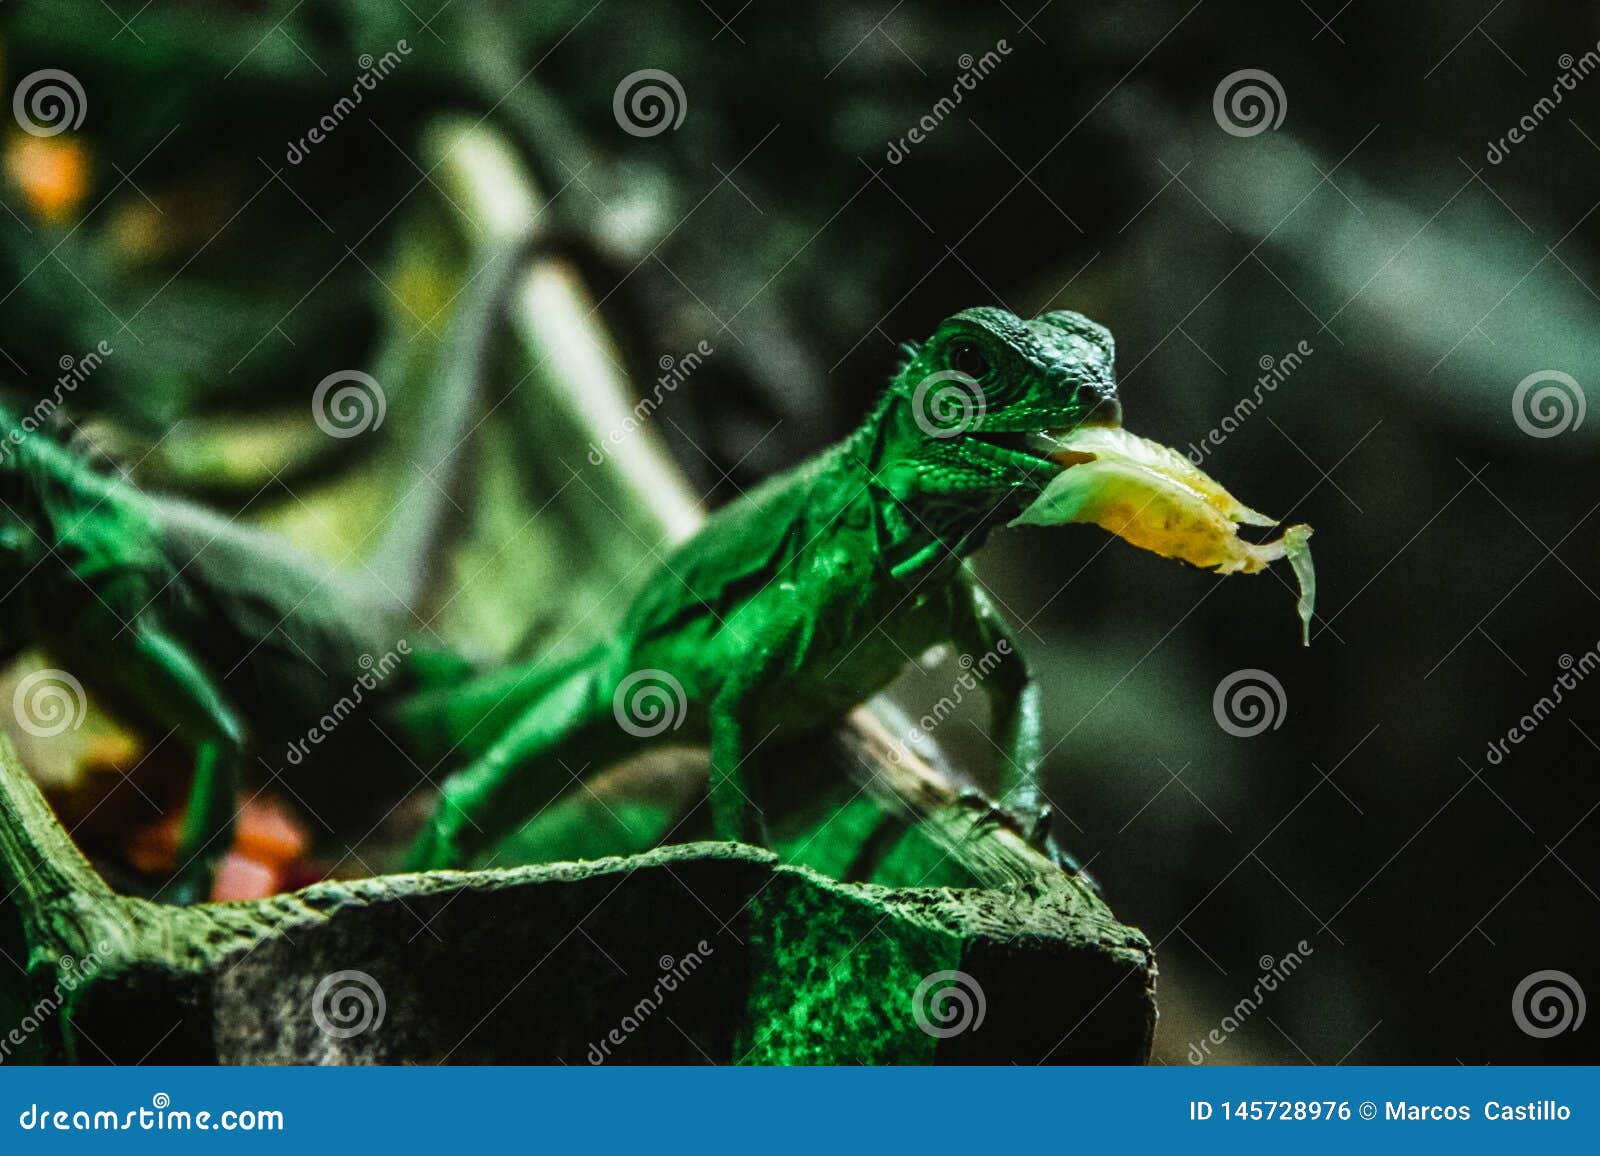 lizard mexican reptile chiapas mexico iguana del sumidero